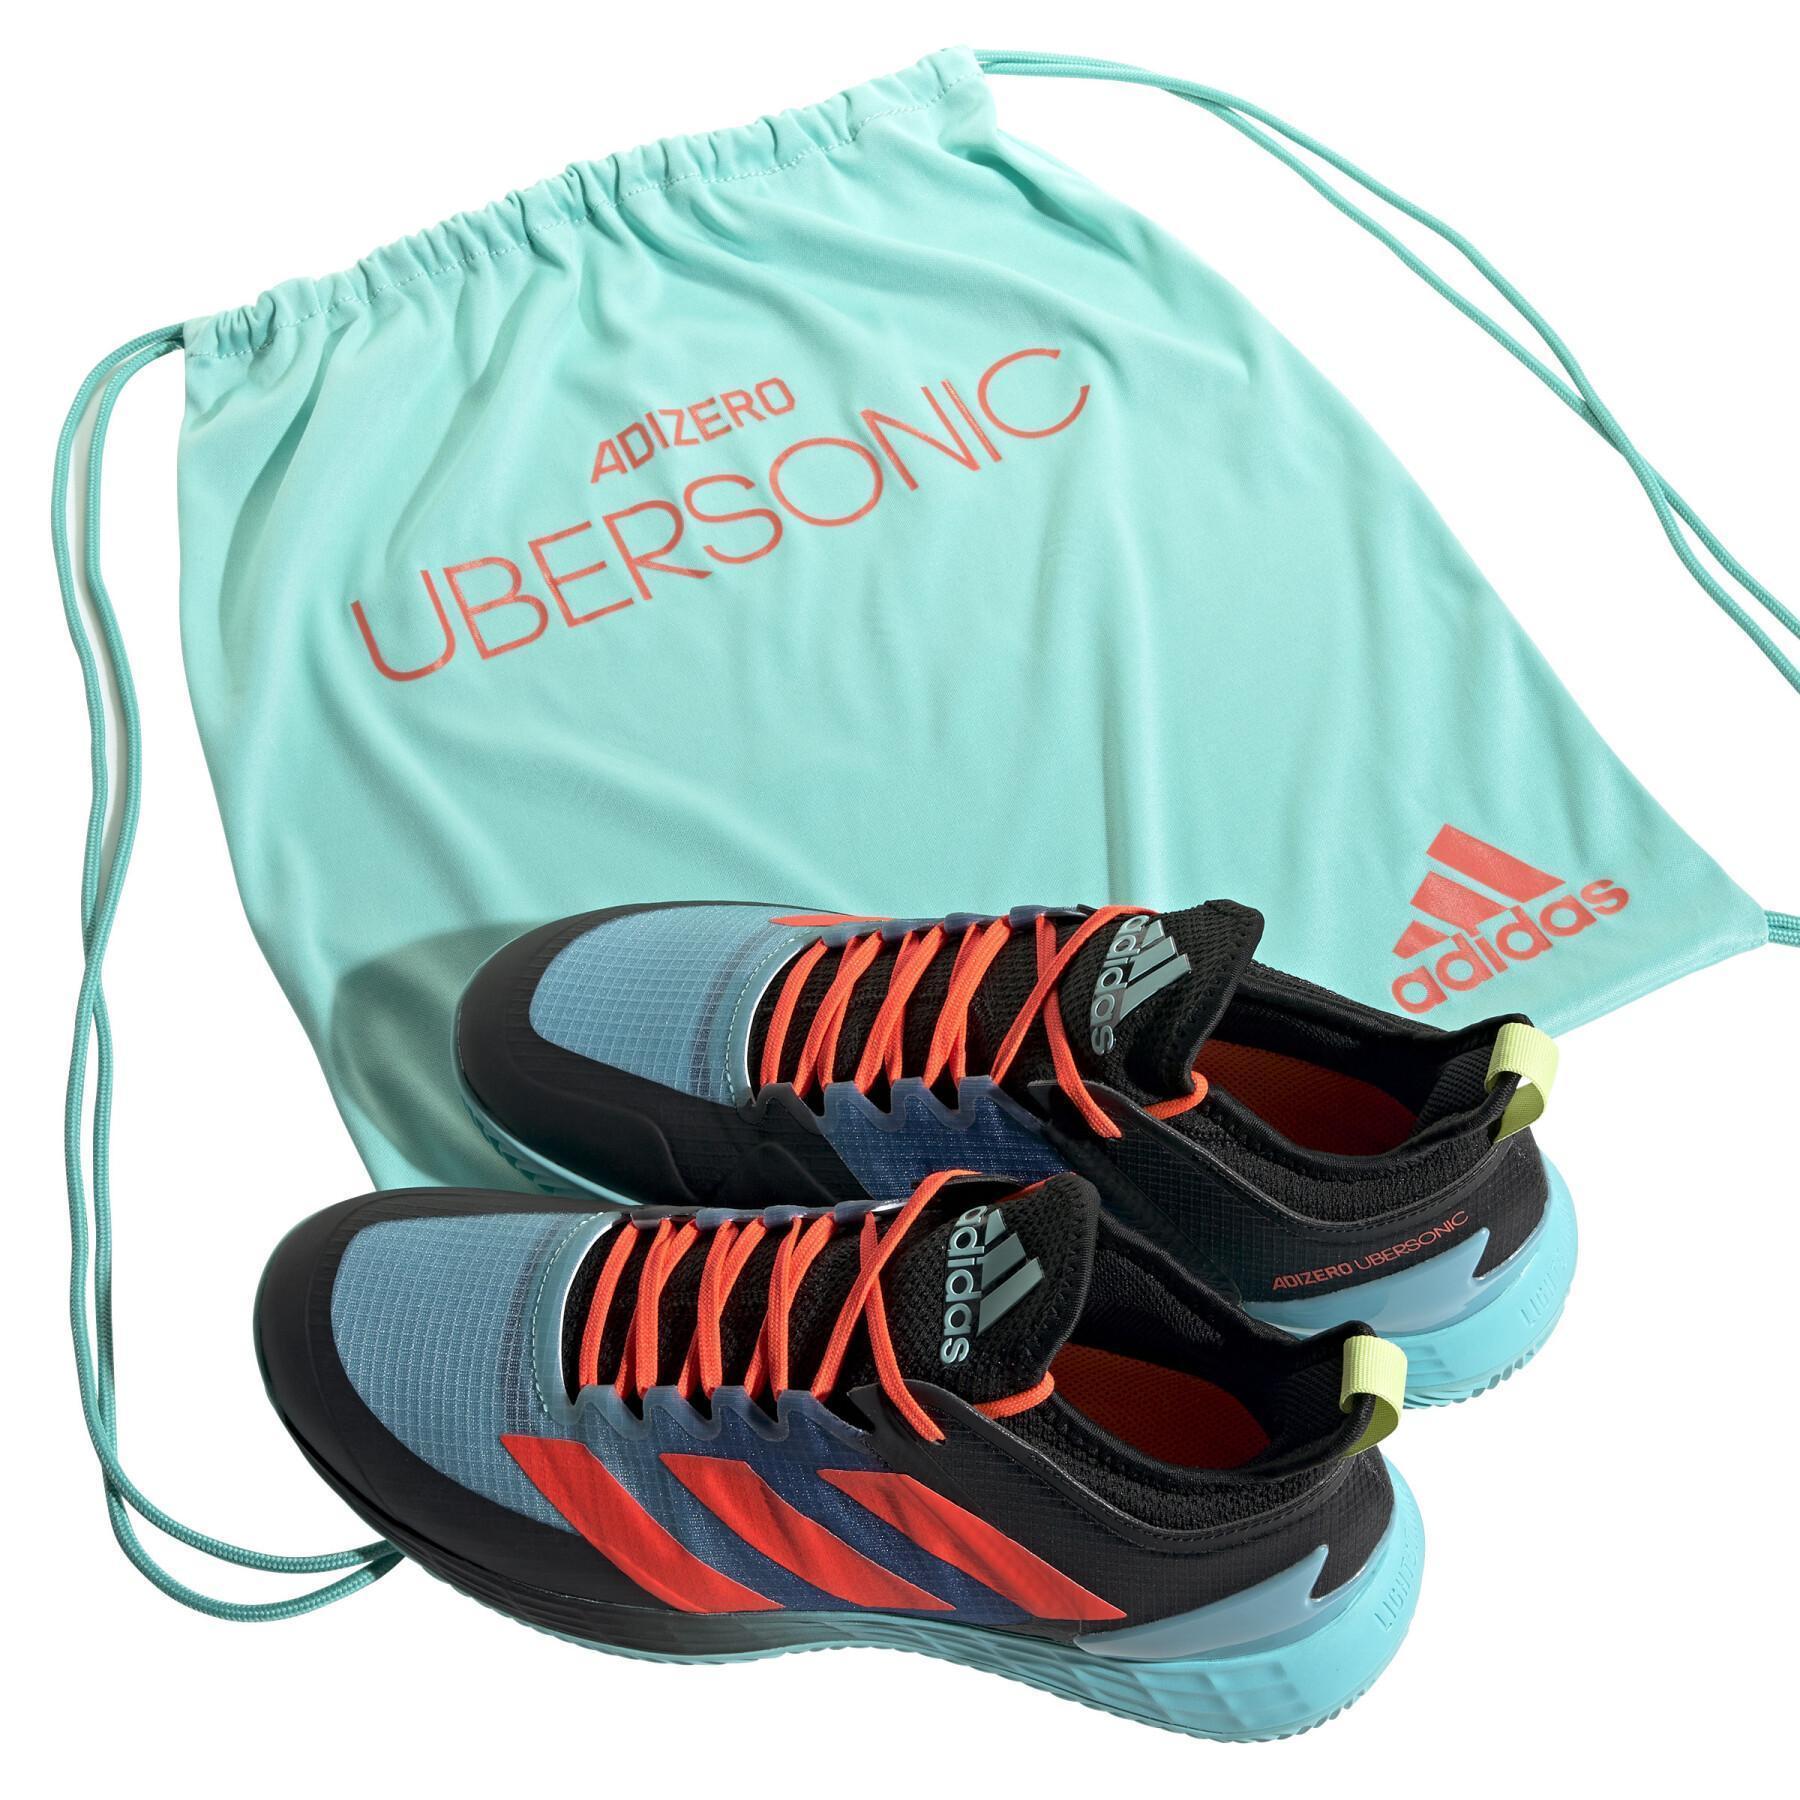 Chaussures de tennis terre battue Adidas Adizero Ubersonic 4